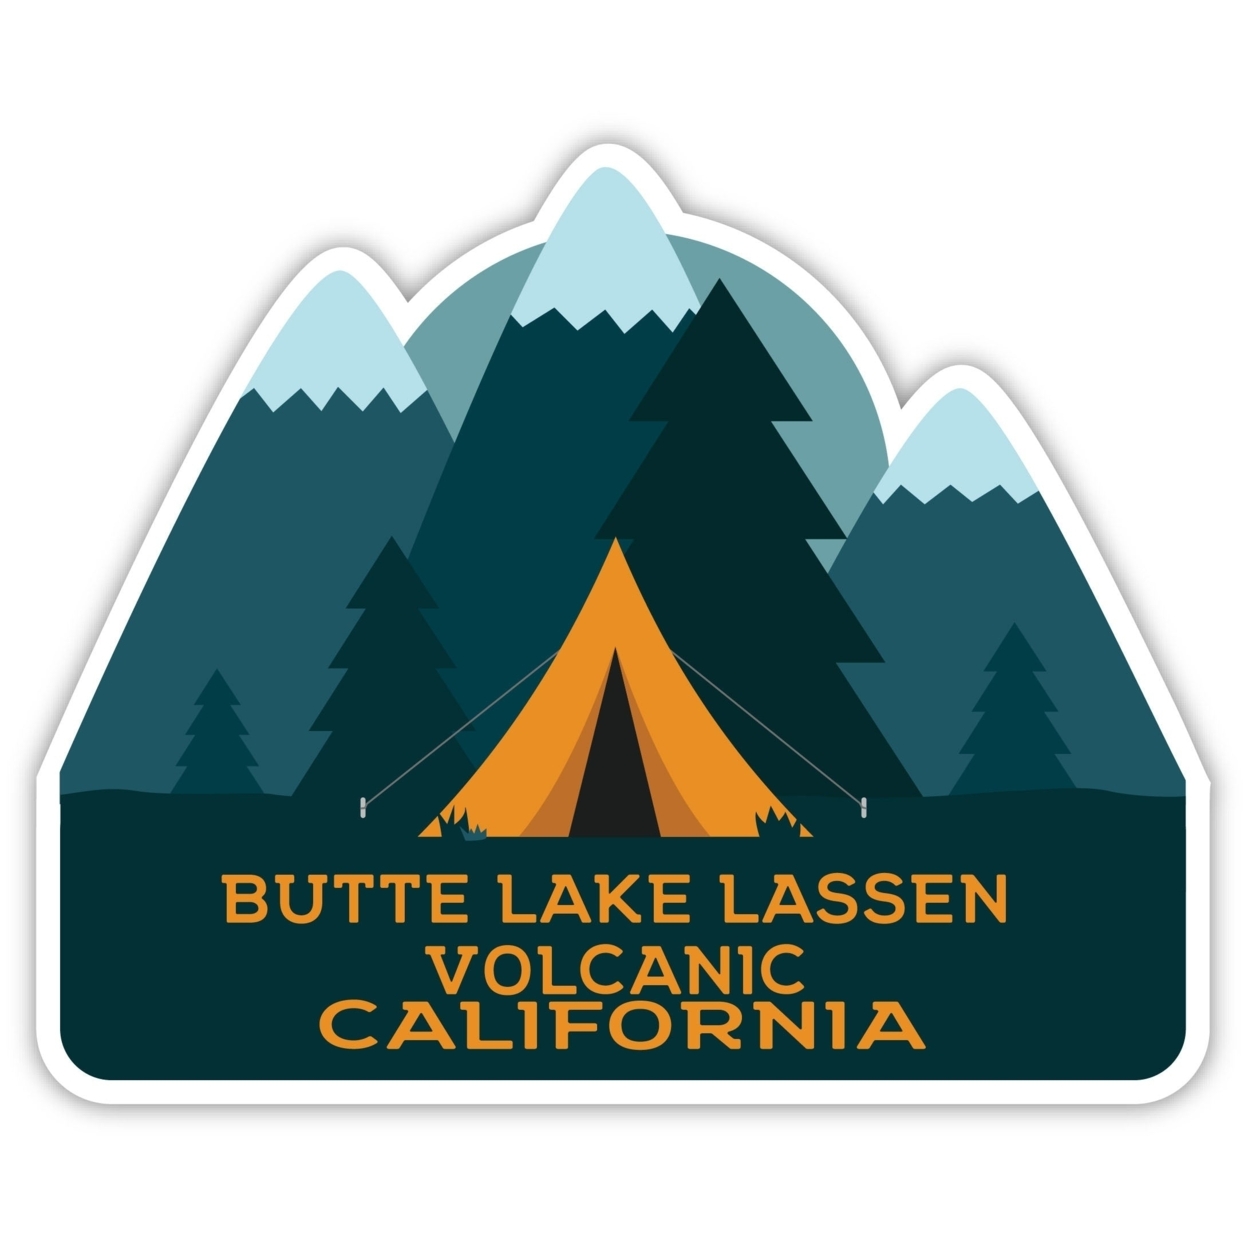 Butte Lake Lassen Volcanic California Souvenir Decorative Stickers (Choose Theme And Size) - Single Unit, 4-Inch, Tent